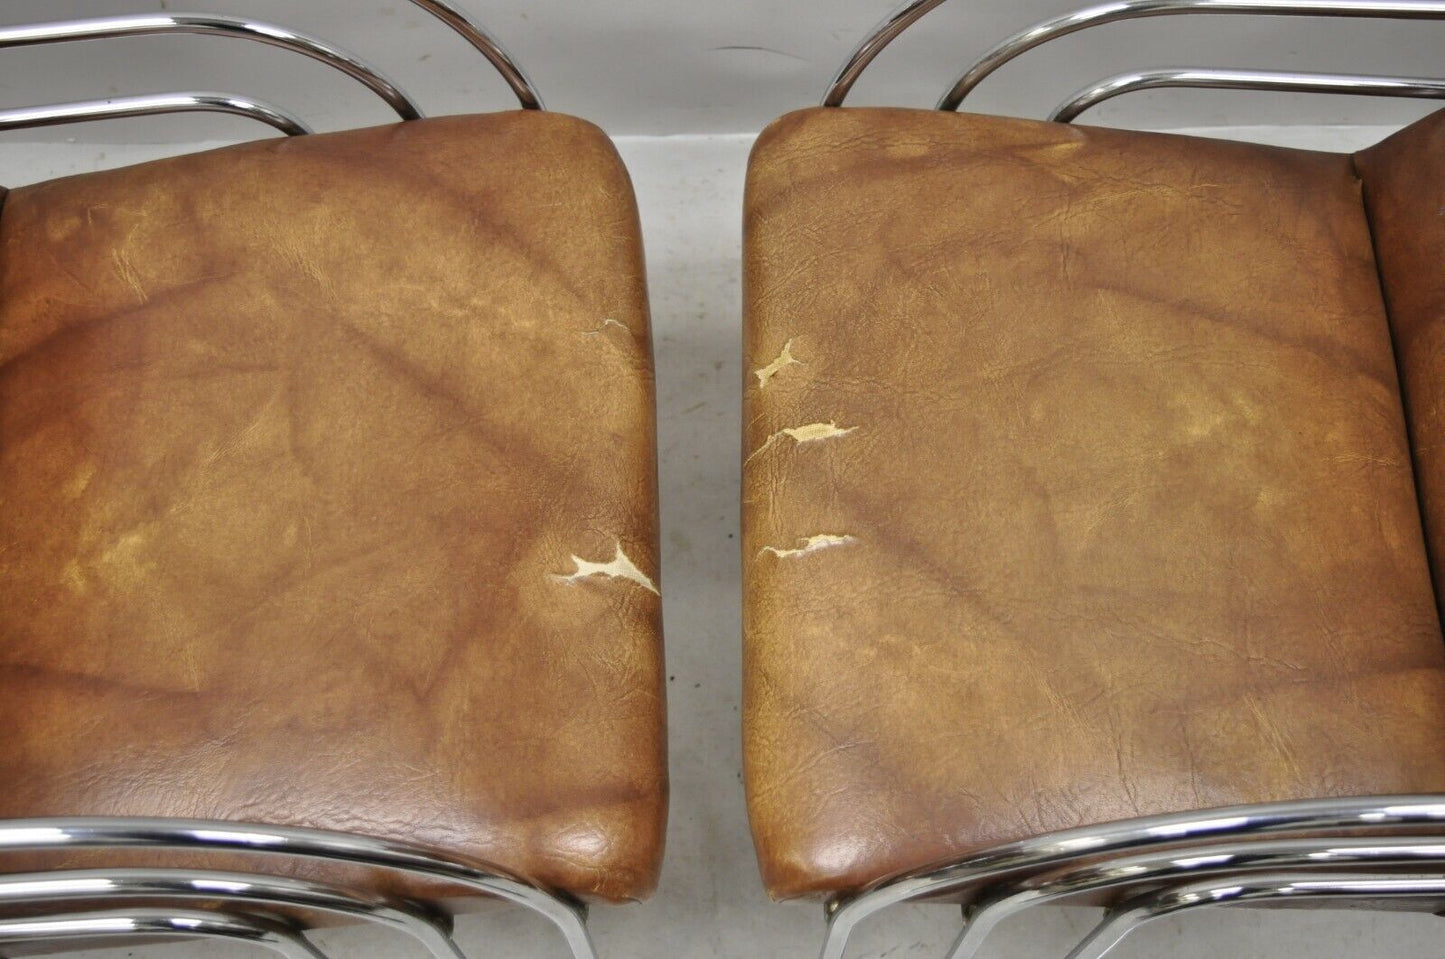 Mid Century Modern Art Deco Chrome Cantilever Milo Baughman Arm Chairs - a Pair